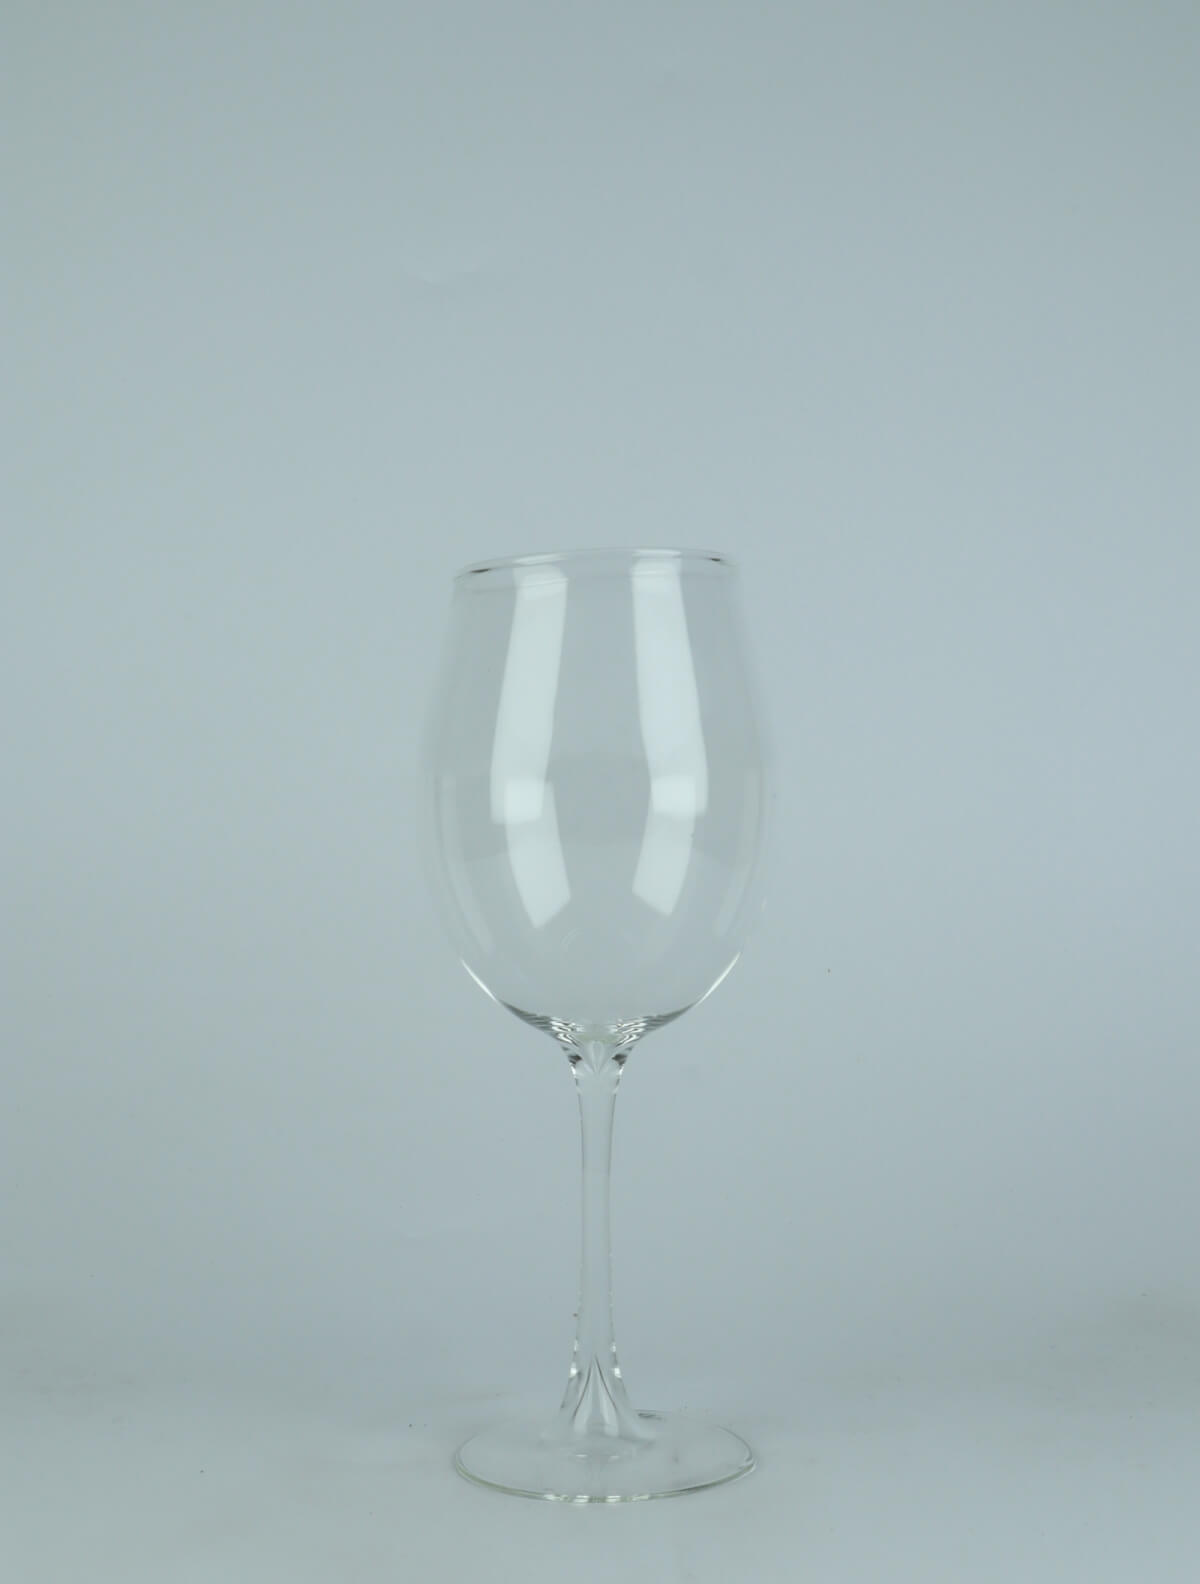 En flaske  Zünd vinglas - 22-23 cm høj, diameter 10 cm, 95 gram Vinglas fra Glasbläserei Zünd, Bern i Schweiz